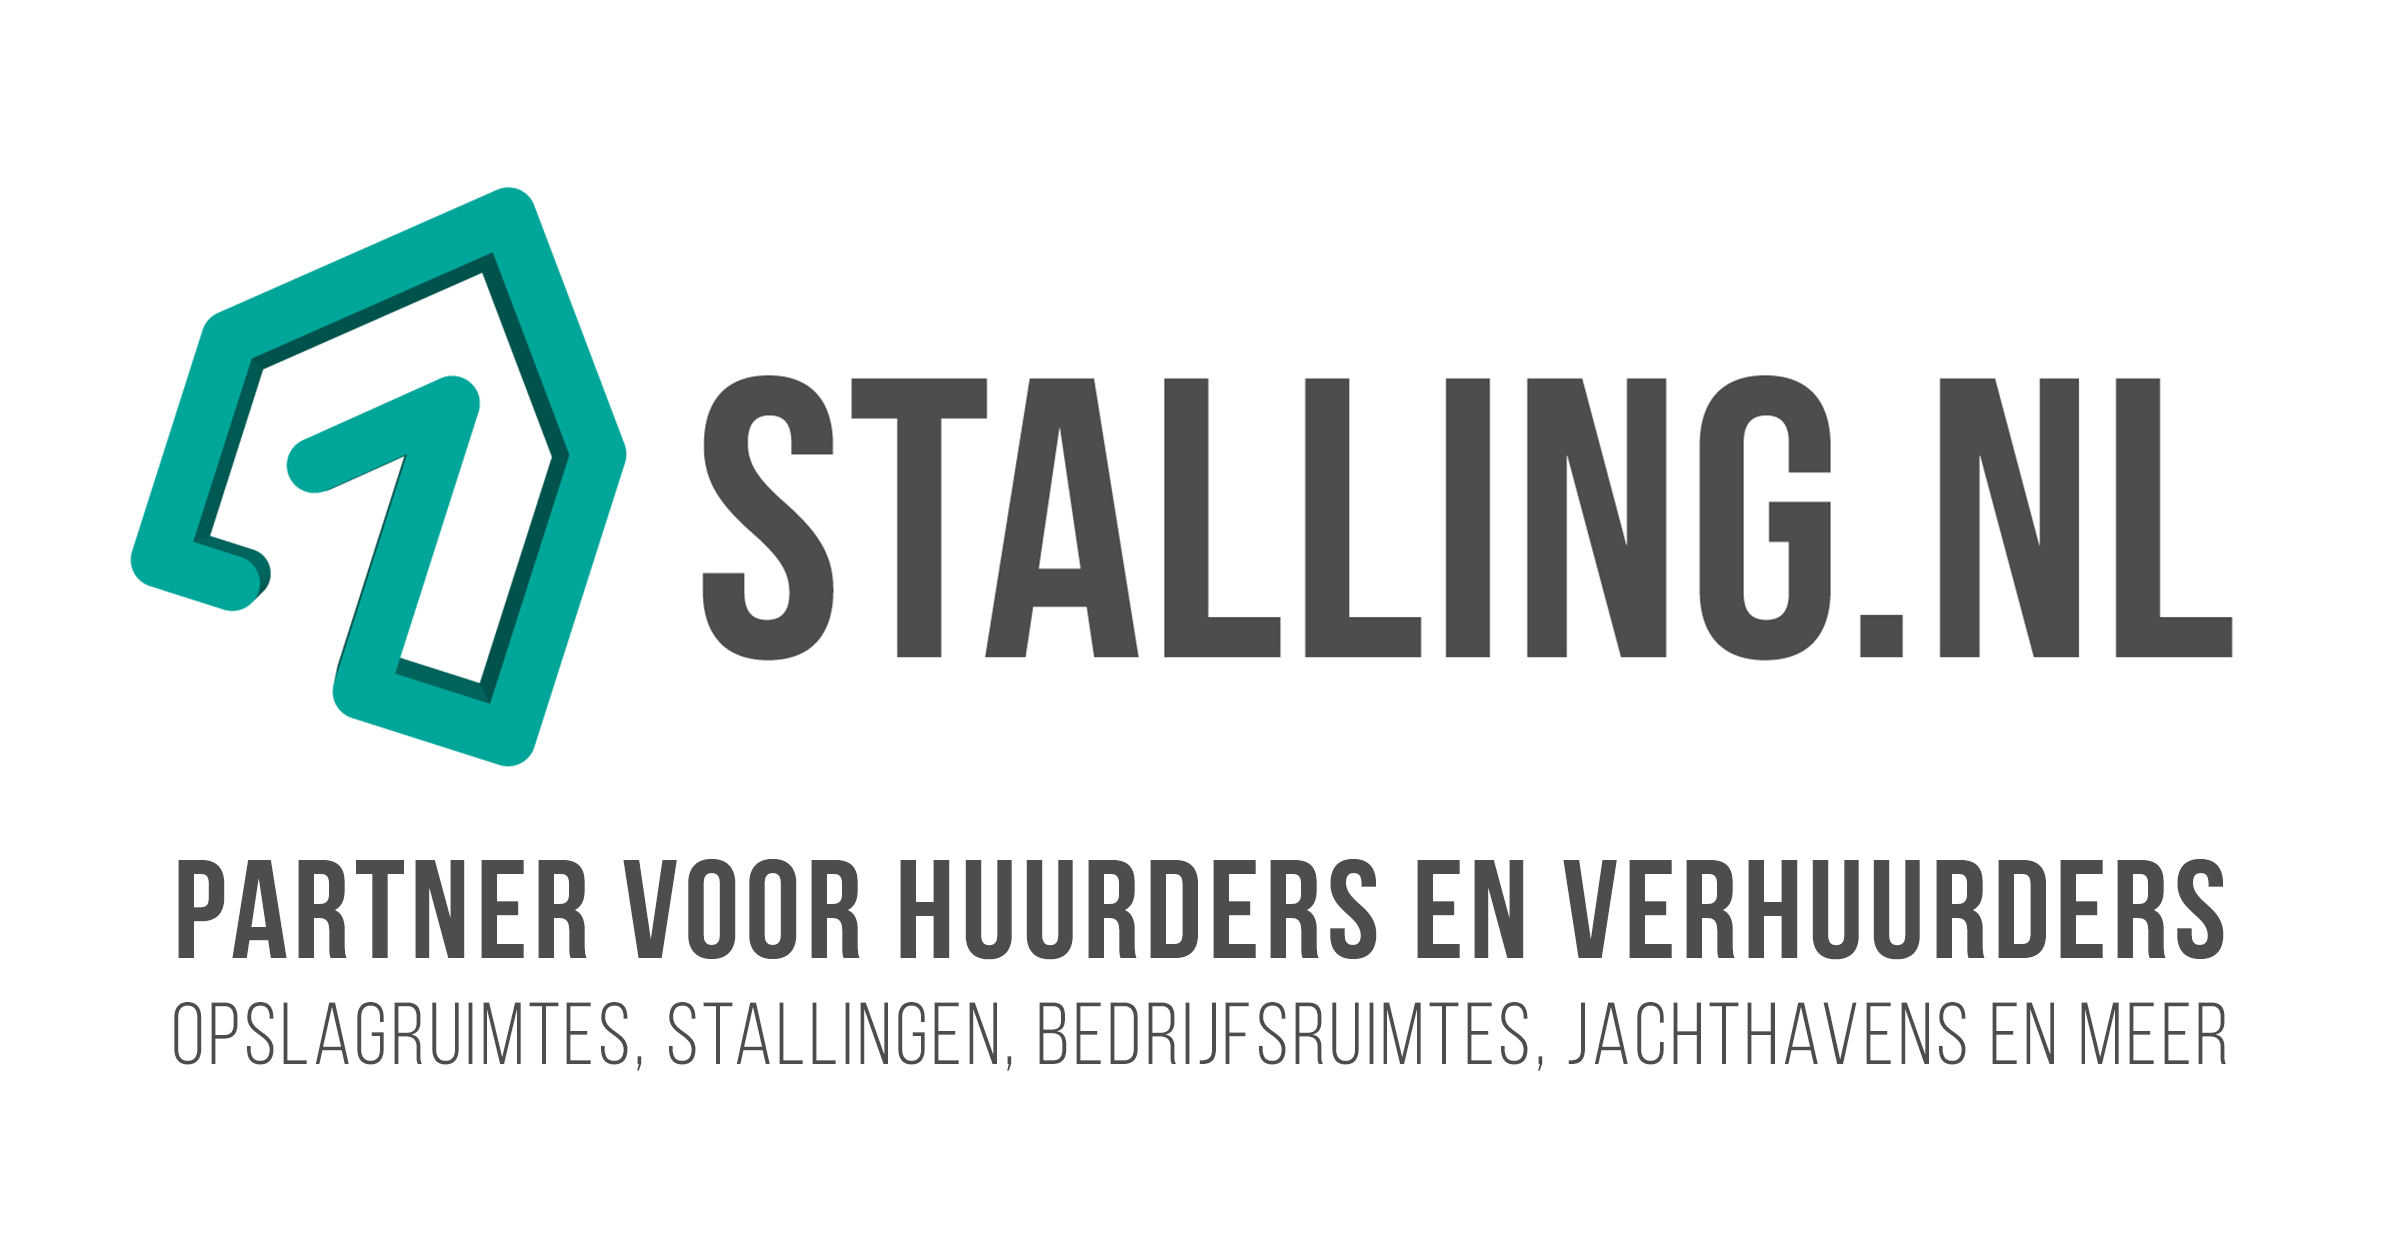 (c) 1stalling.nl